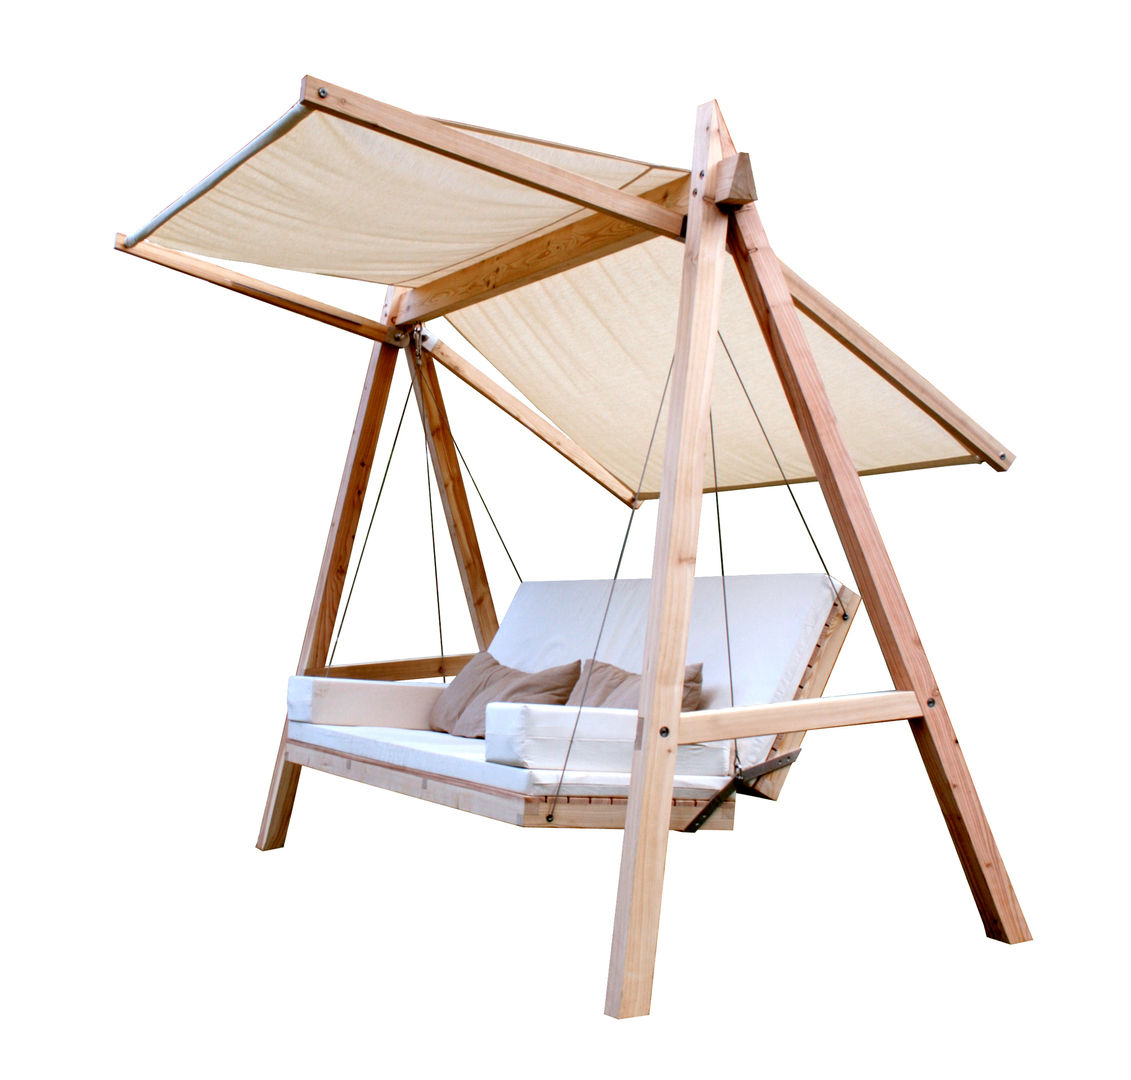 Hollywoodschaukel aus Holz im skandinavischen Stil, Pool22.Design Pool22.Design Modern Garden Wood Wood effect Furniture